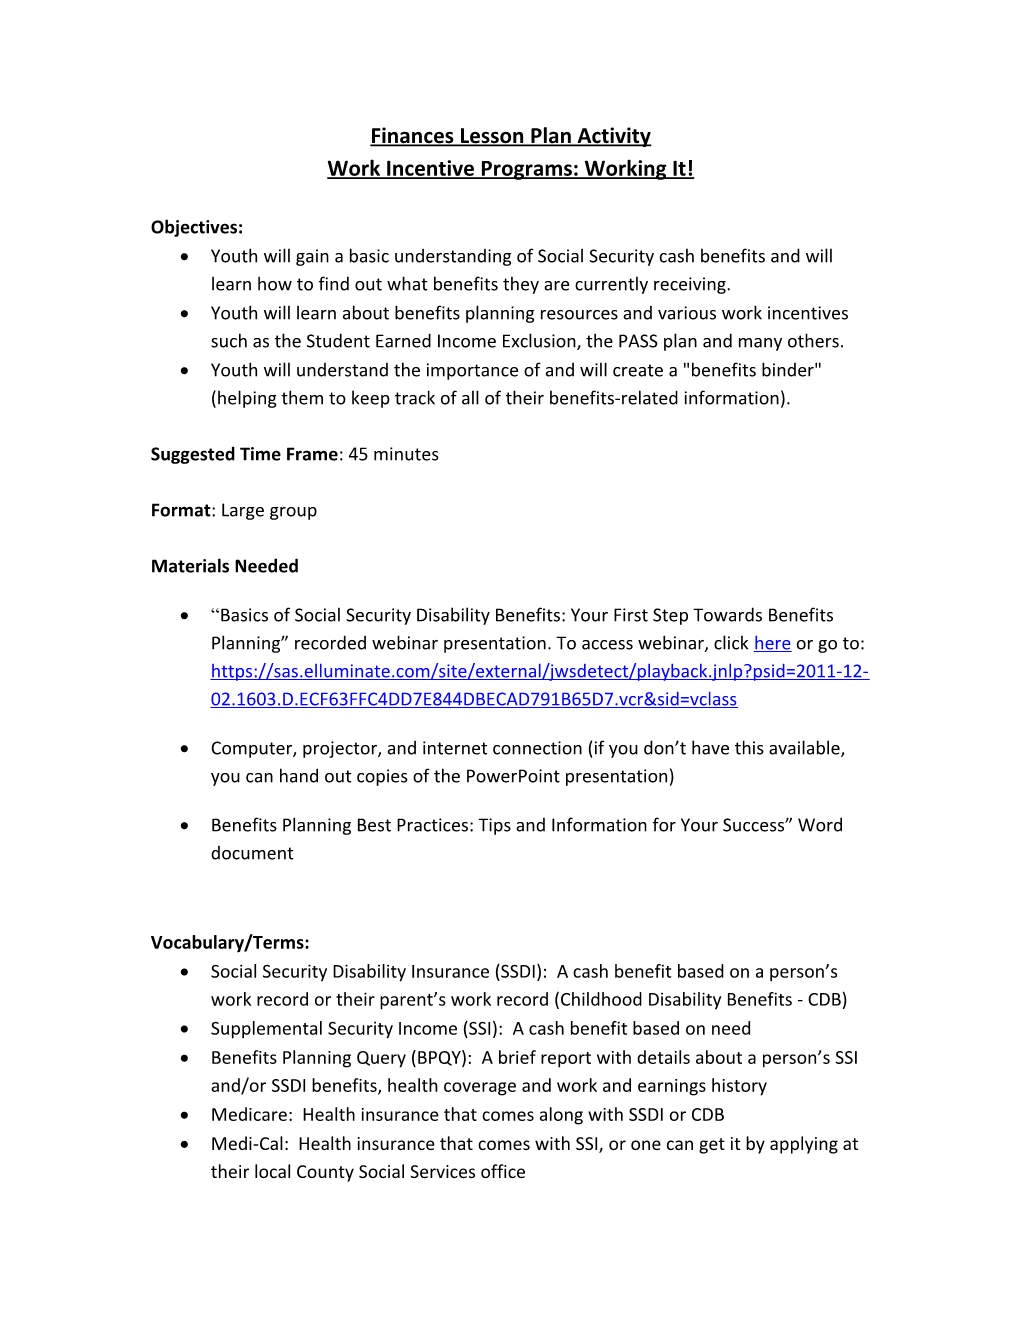 Activity II: Work Incentive Programs: Working It